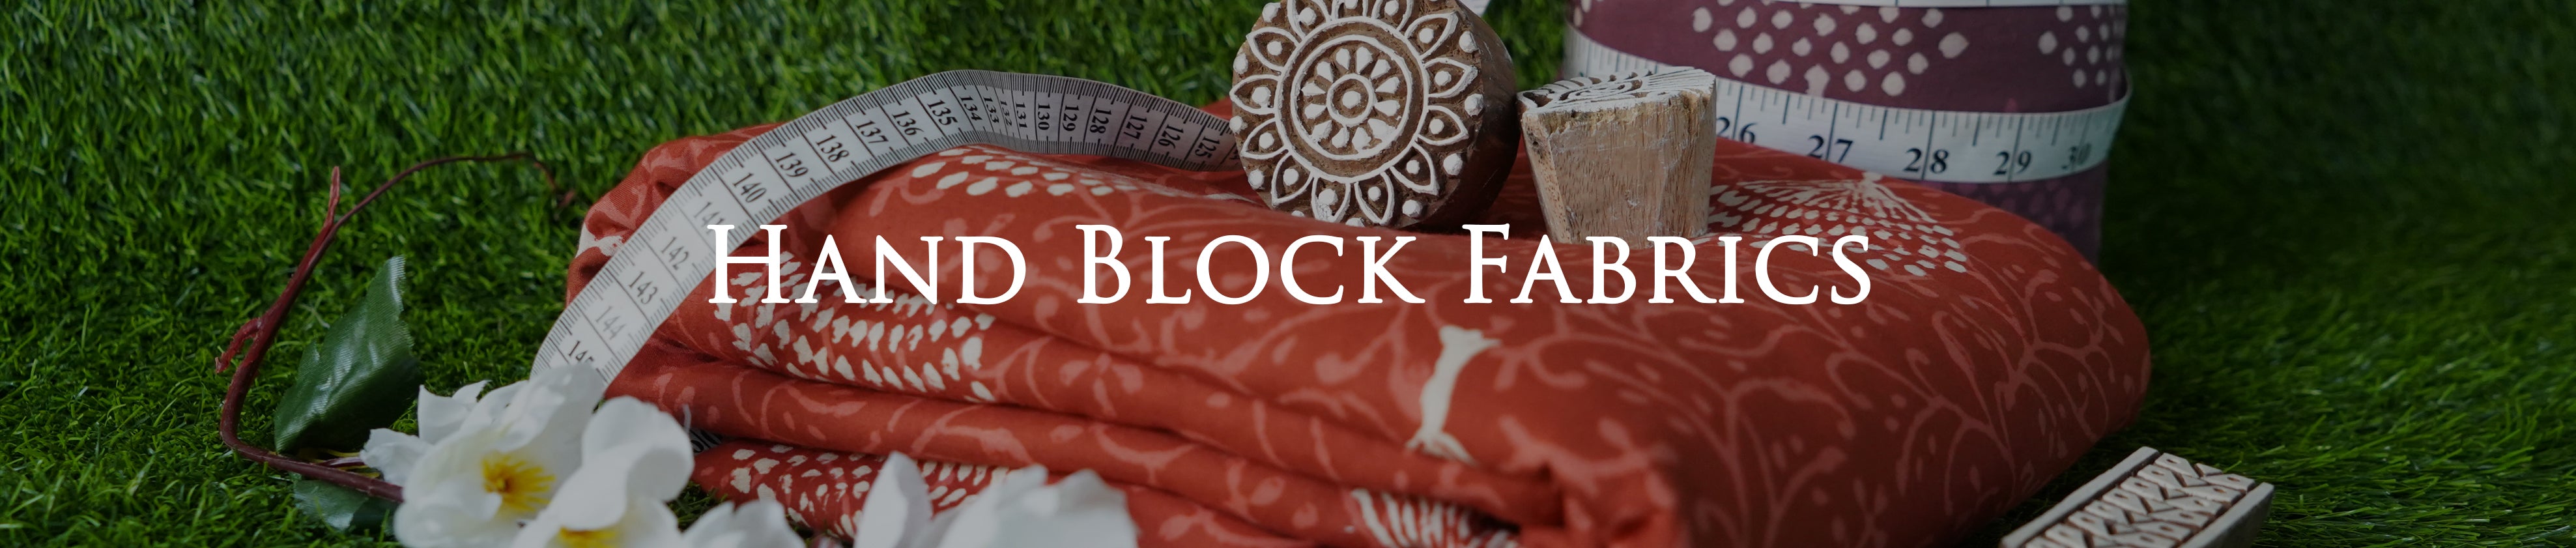 Hand Block Fabrics